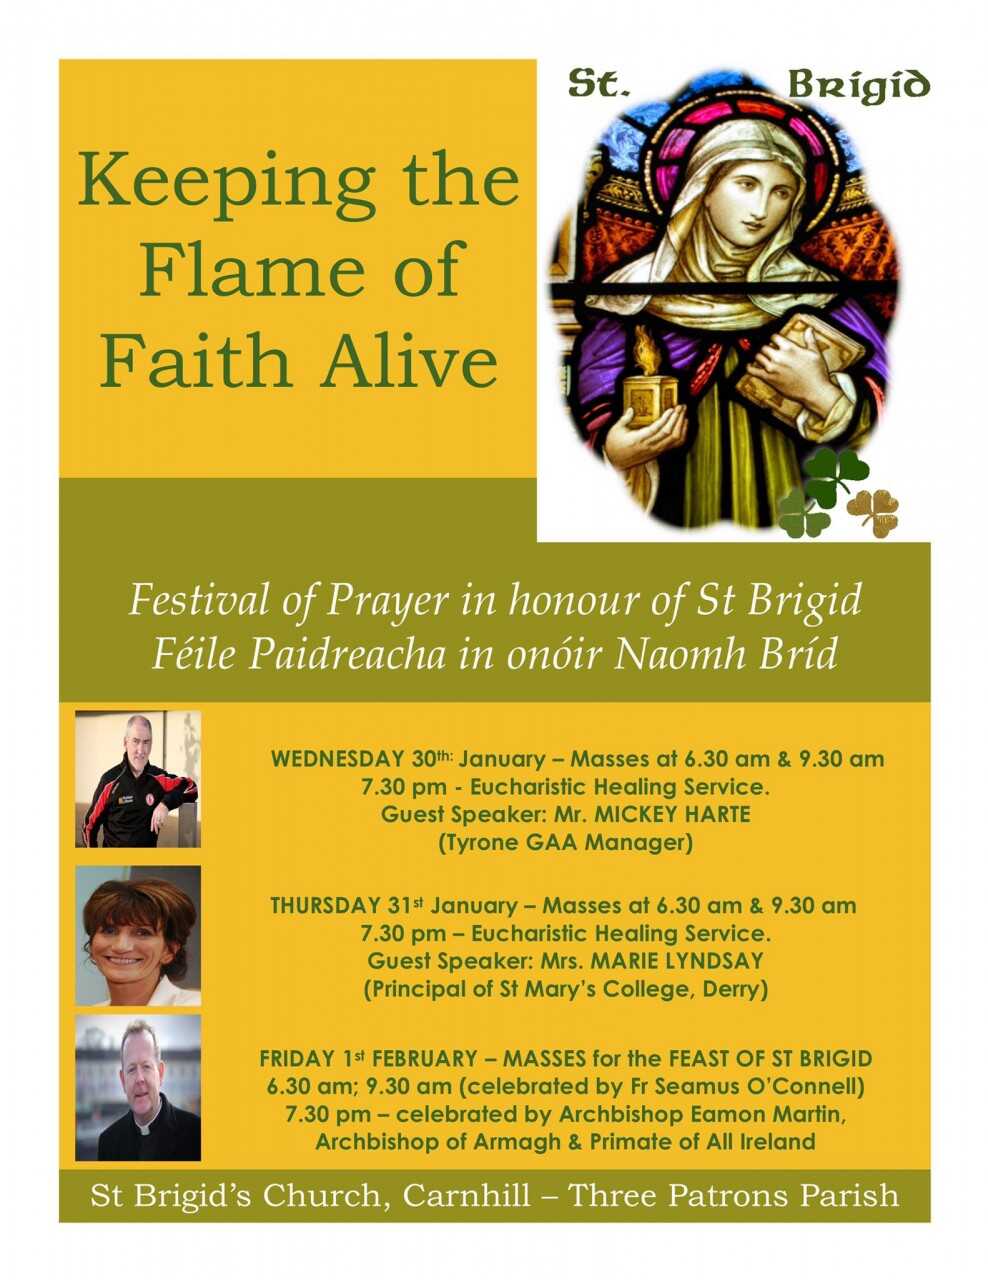 Festival of Prayer - St Brigid's Church, Carnhill, Derry - 30th Jan-1st Feb 2019